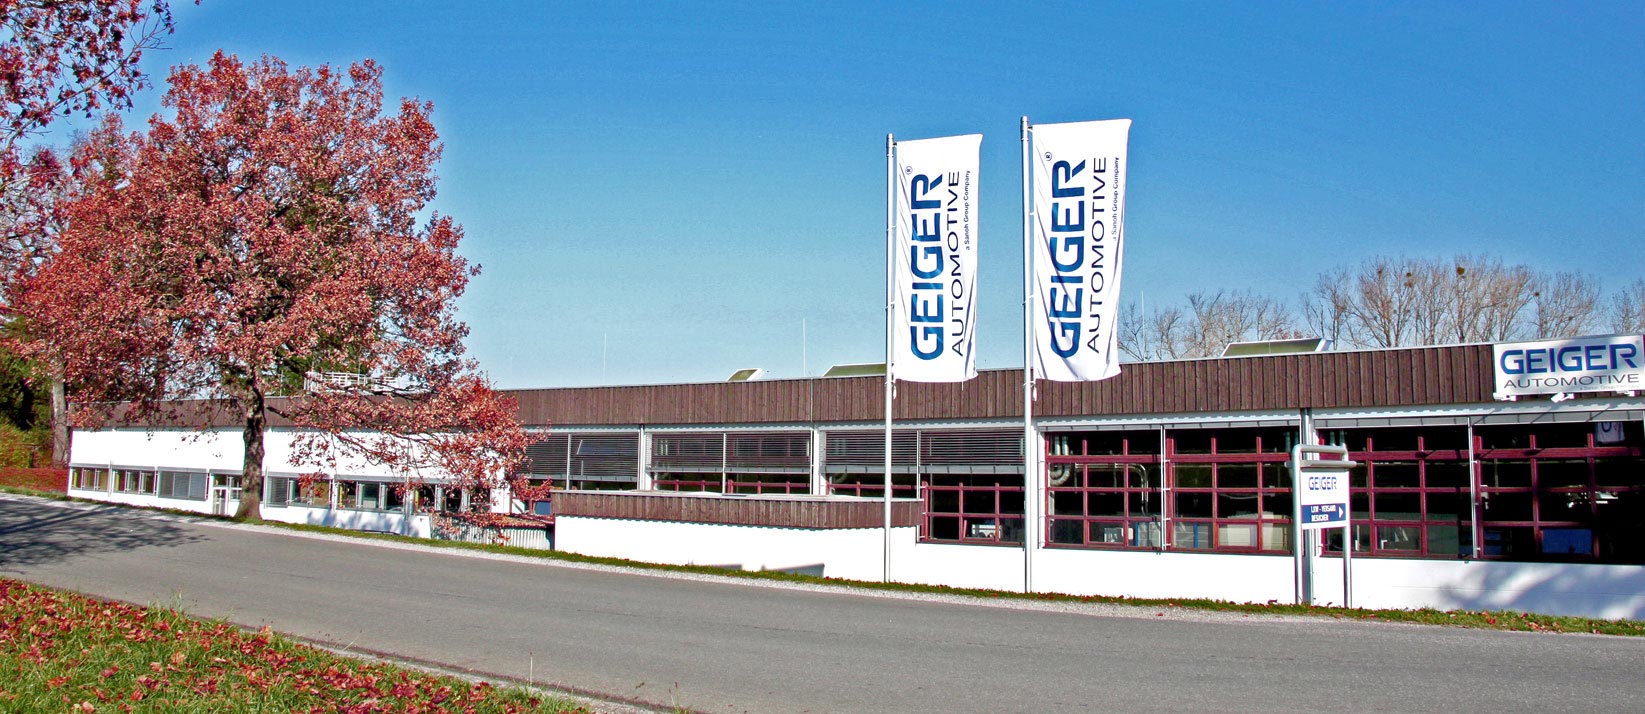 Headerbild Geiger Automotive GmbH - Global Tooling Manager (m/w/d) - 7771898